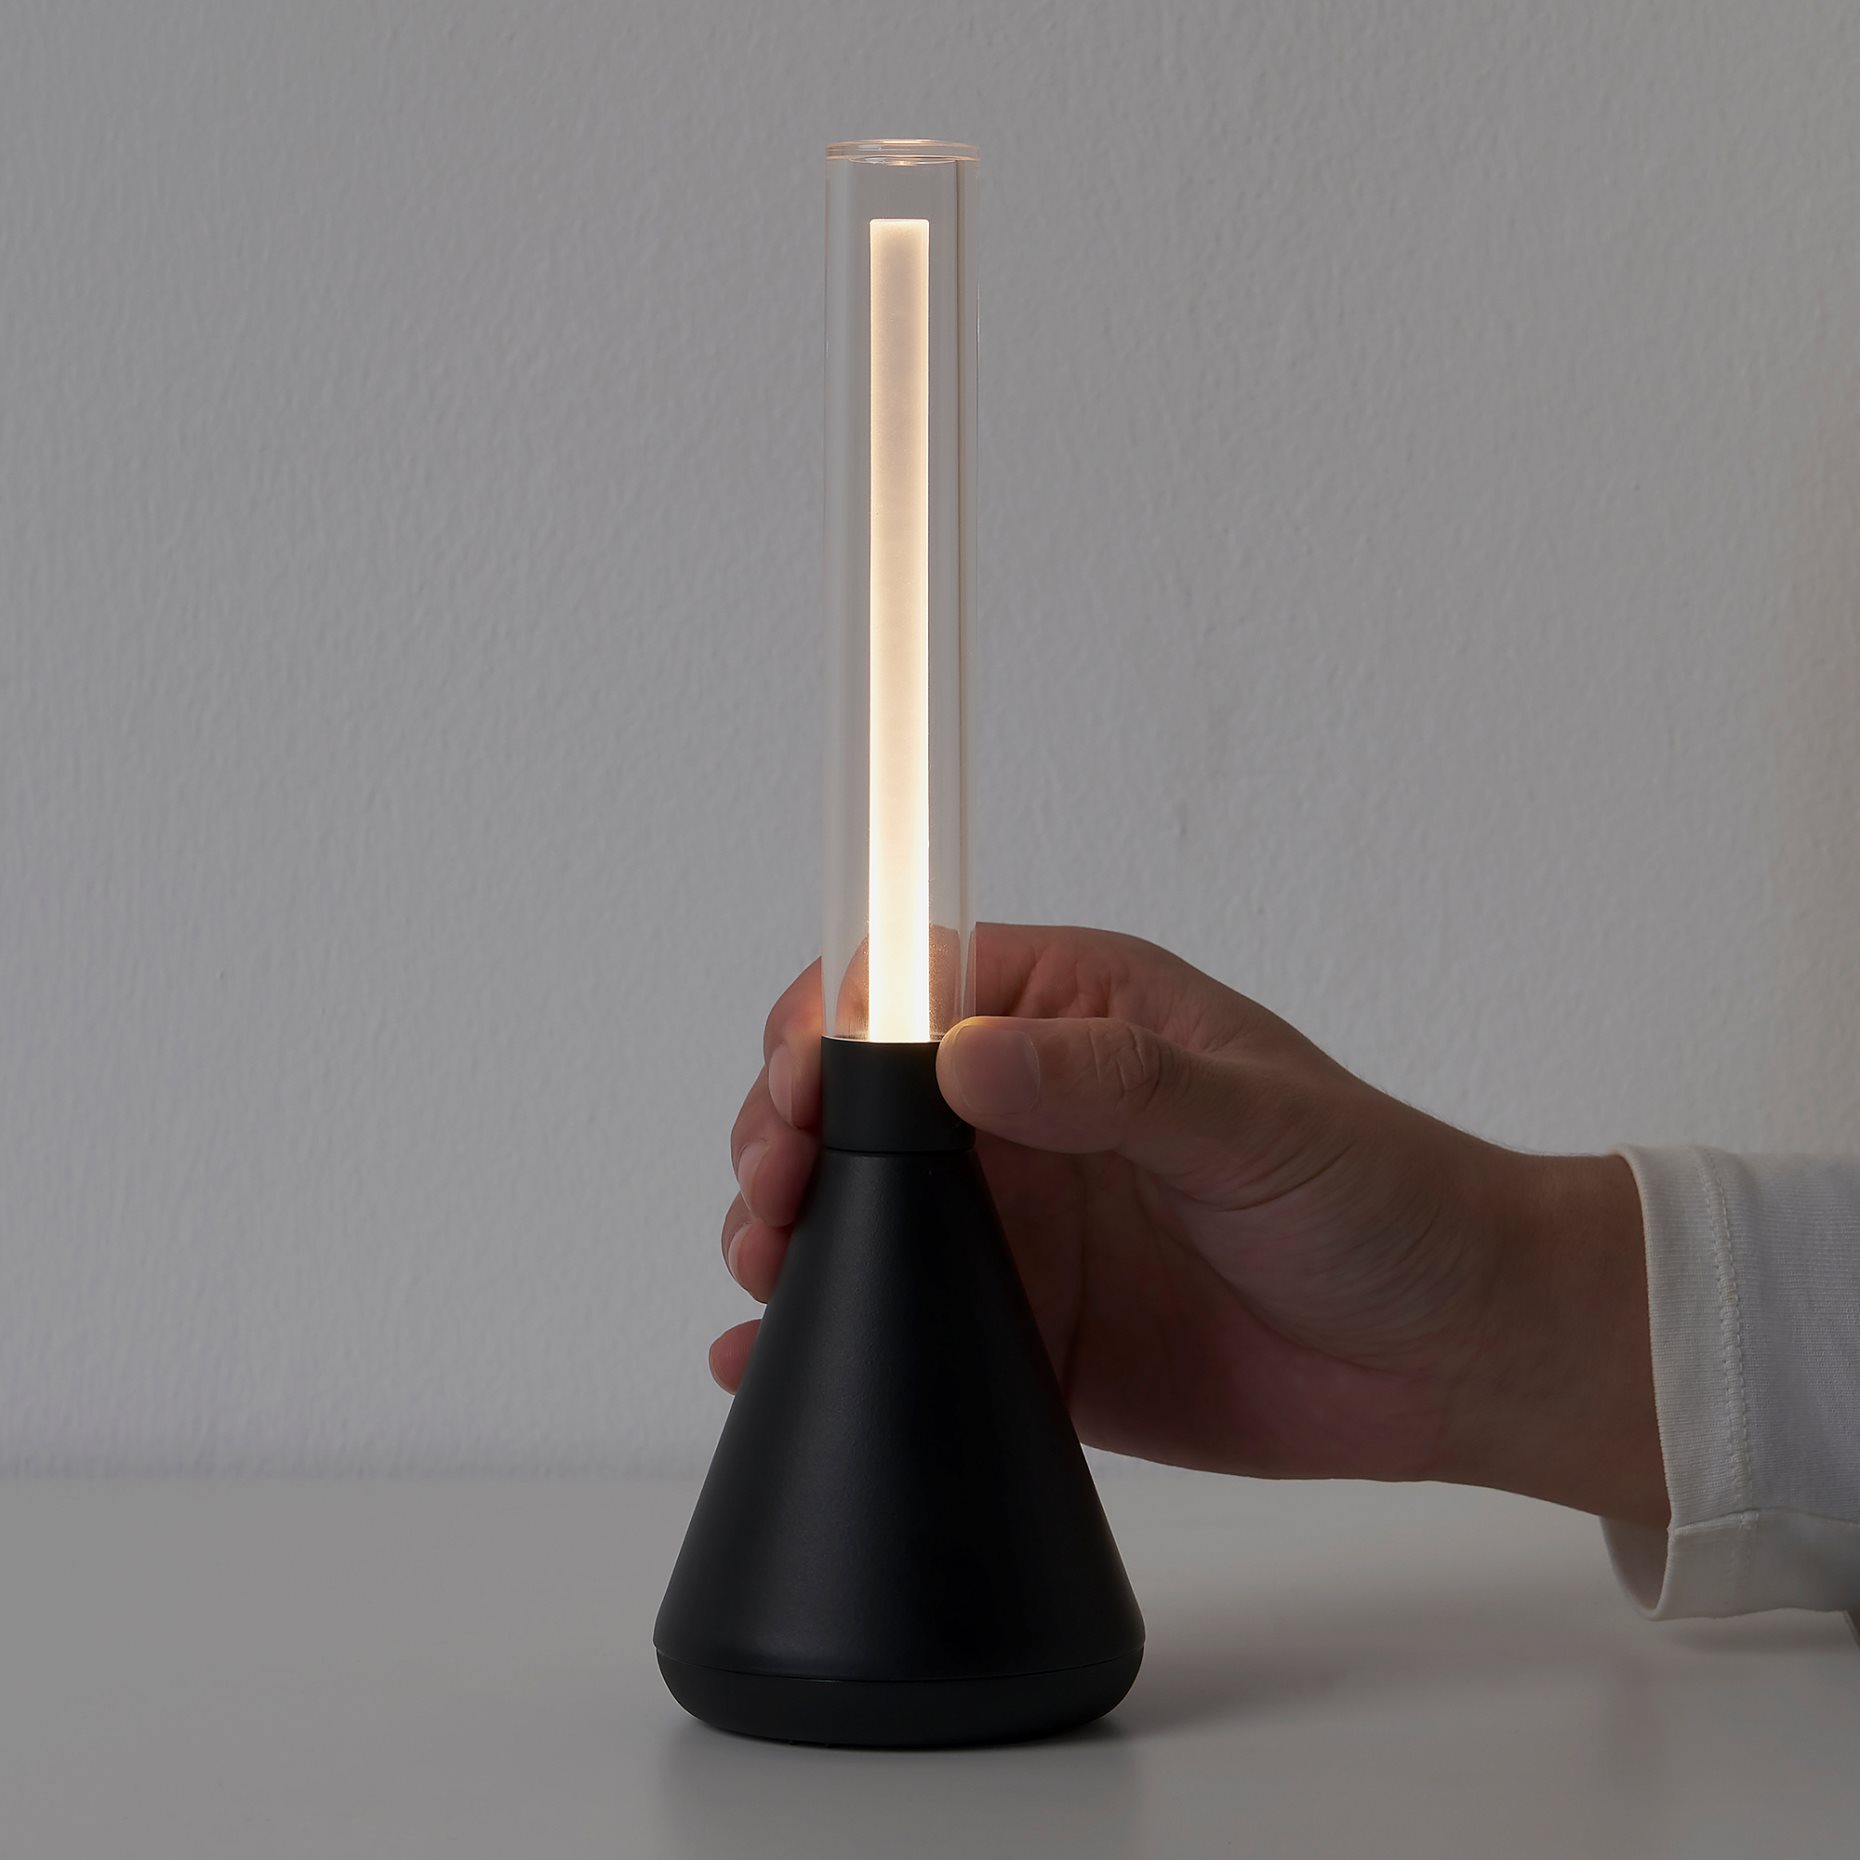 BJÖRKSPIREA, διακοσμητικός φωτισμός με ενσωματωμένο φωτισμό LED/σχήμα σωλήνα, 305.301.40